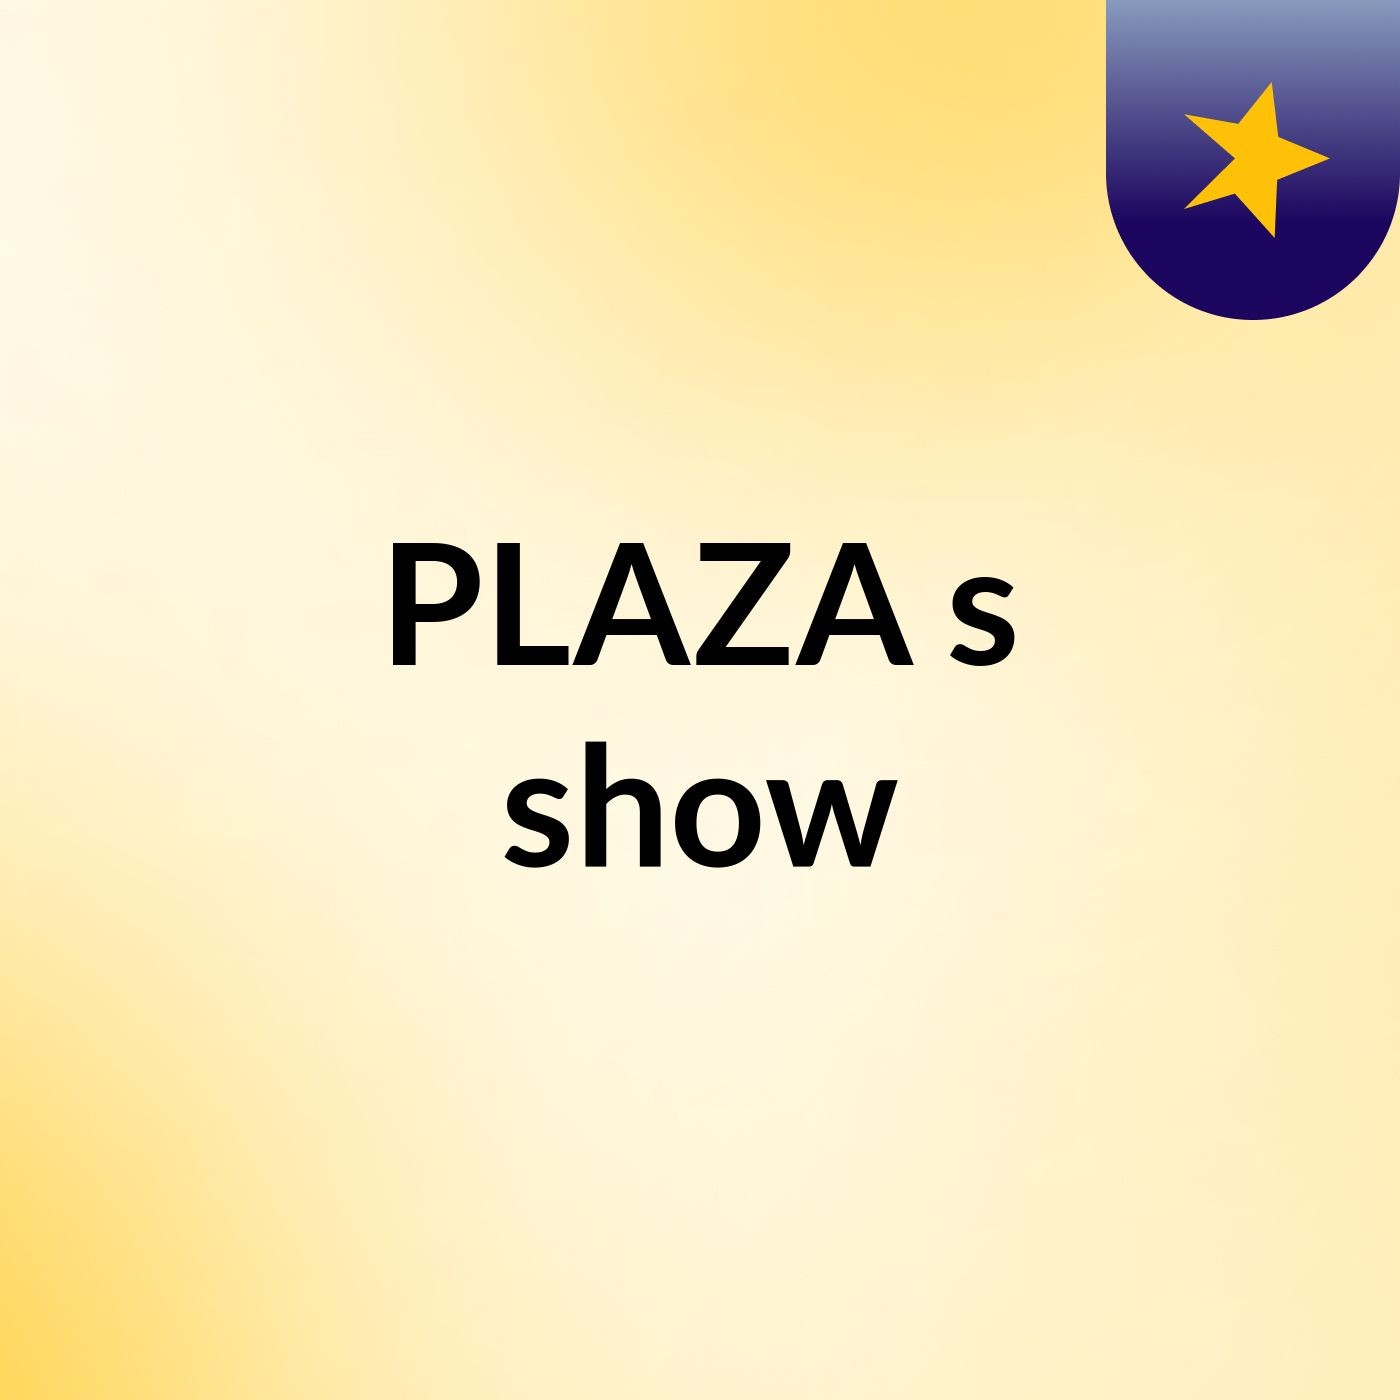 PLAZA's show